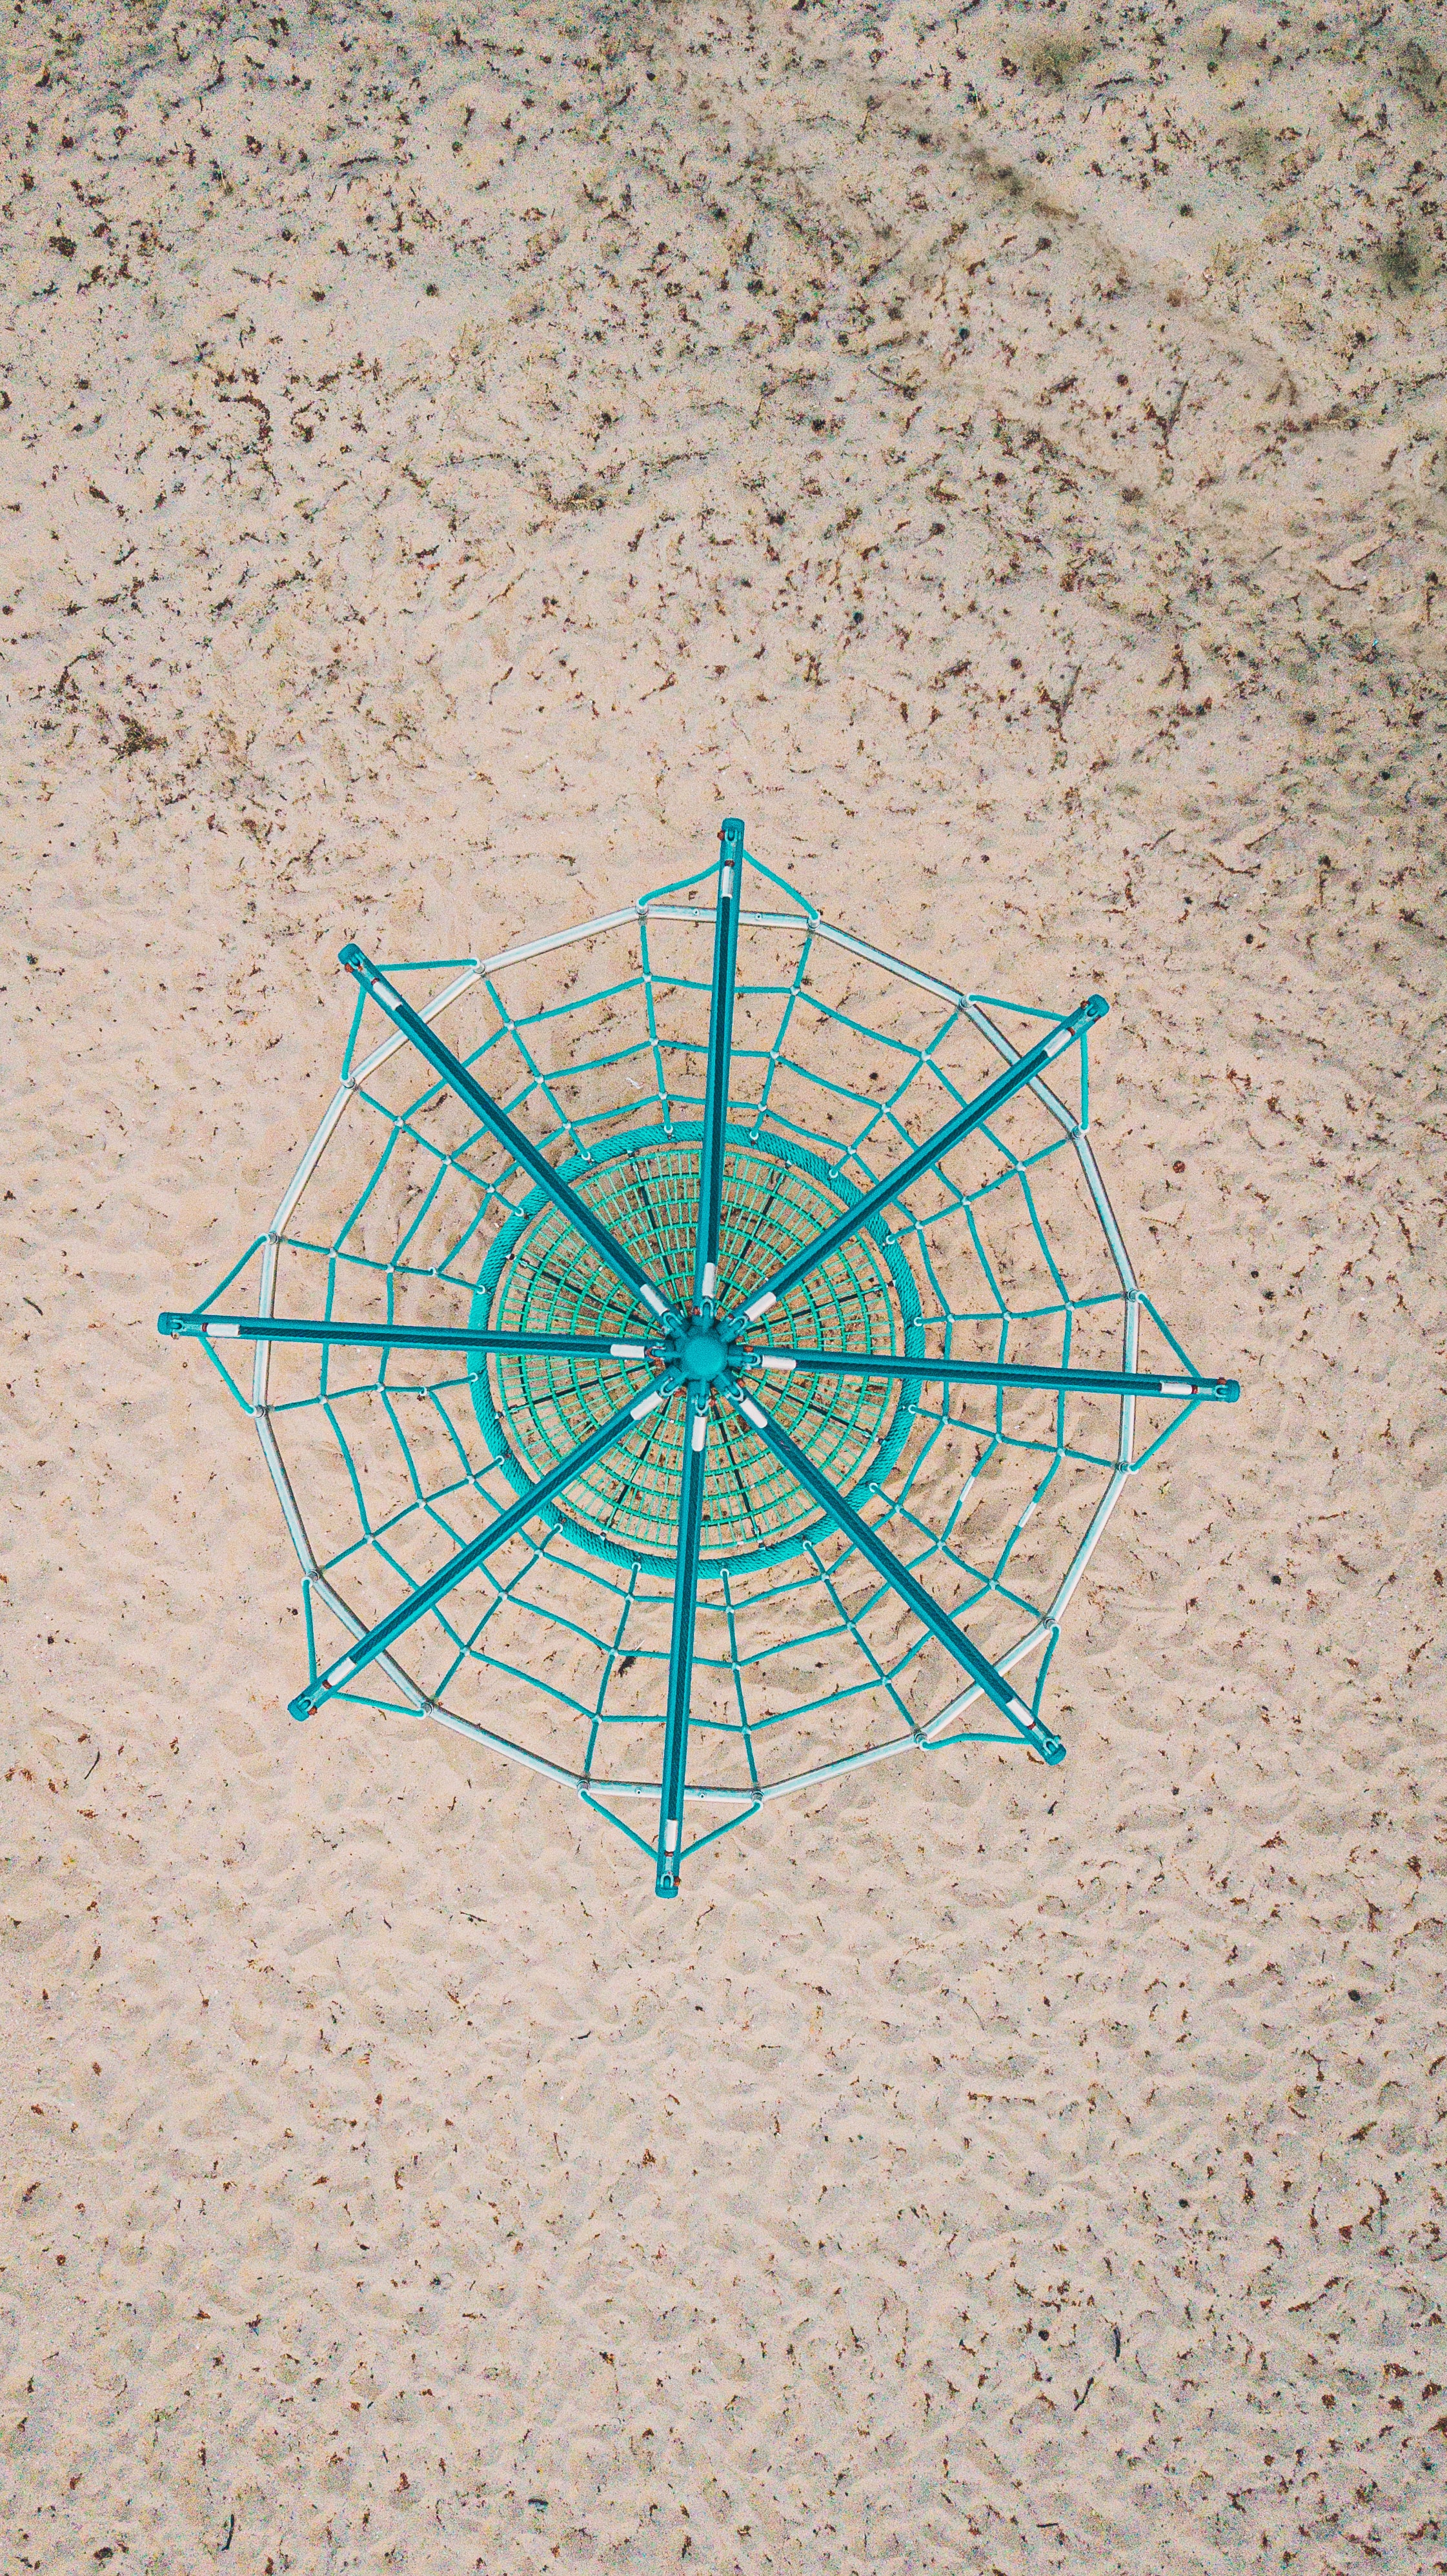 A blue geometrical shape on a beach seen from above